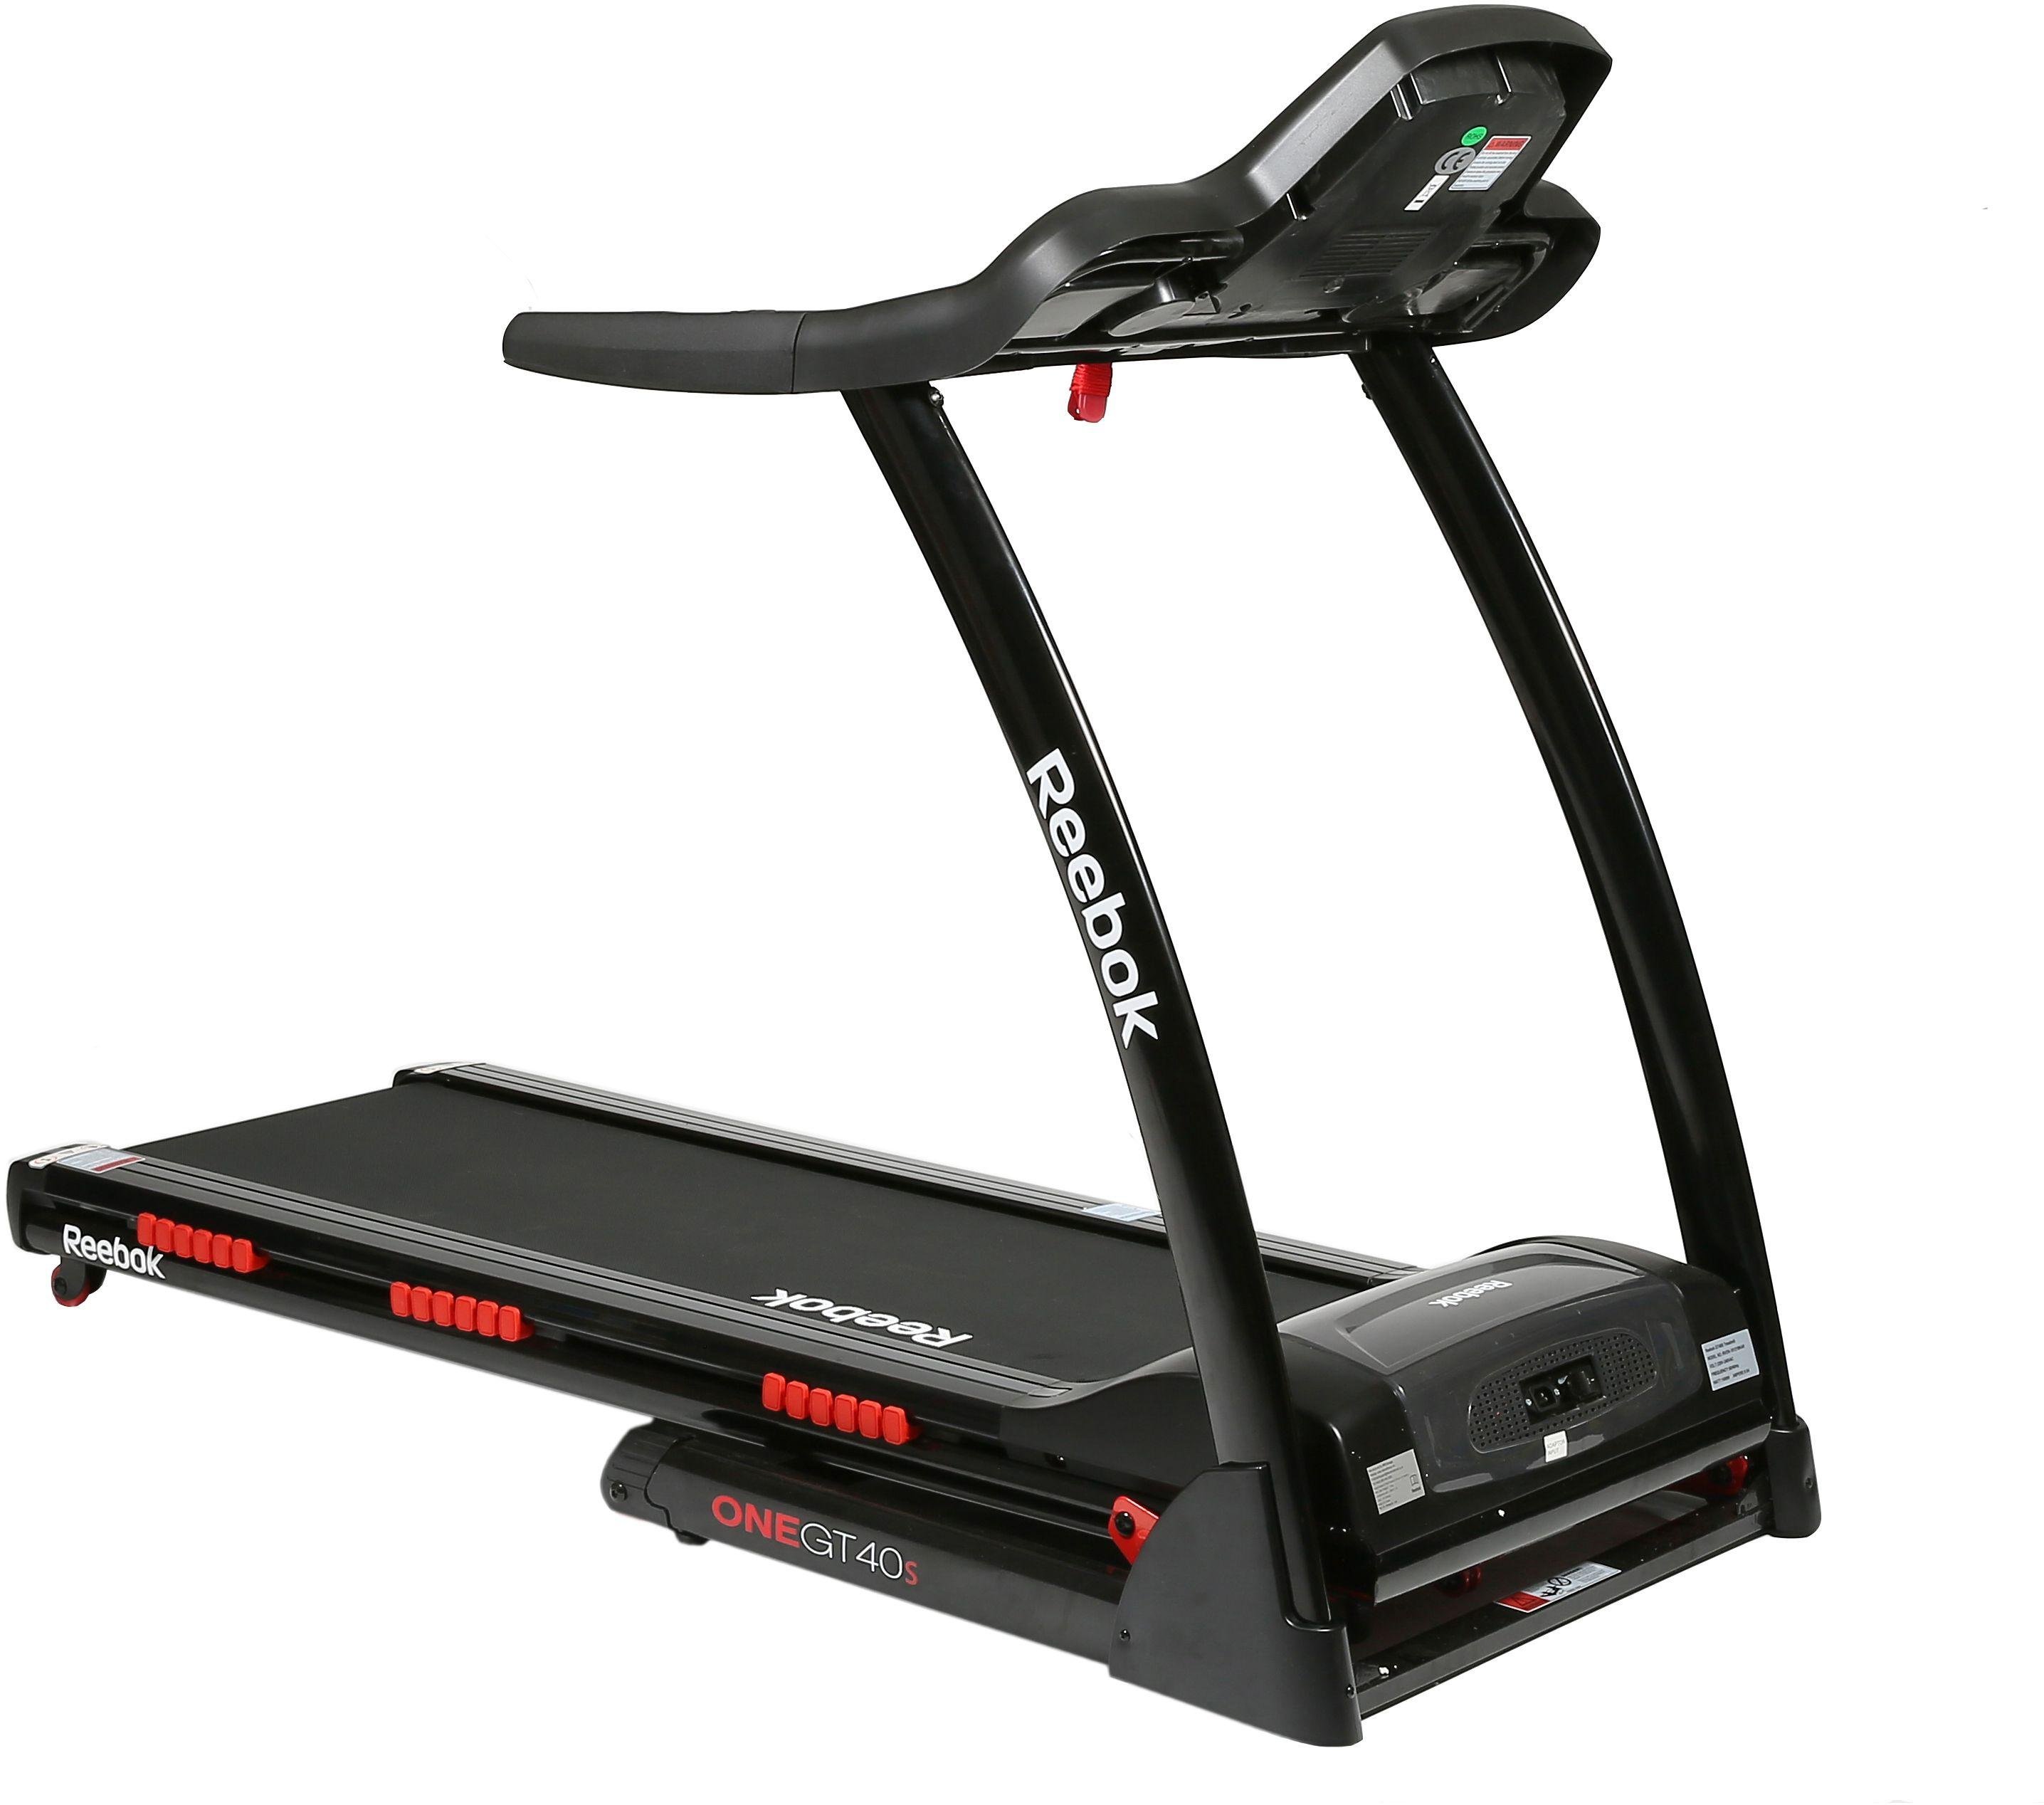 reebok one gt40s treadmill video